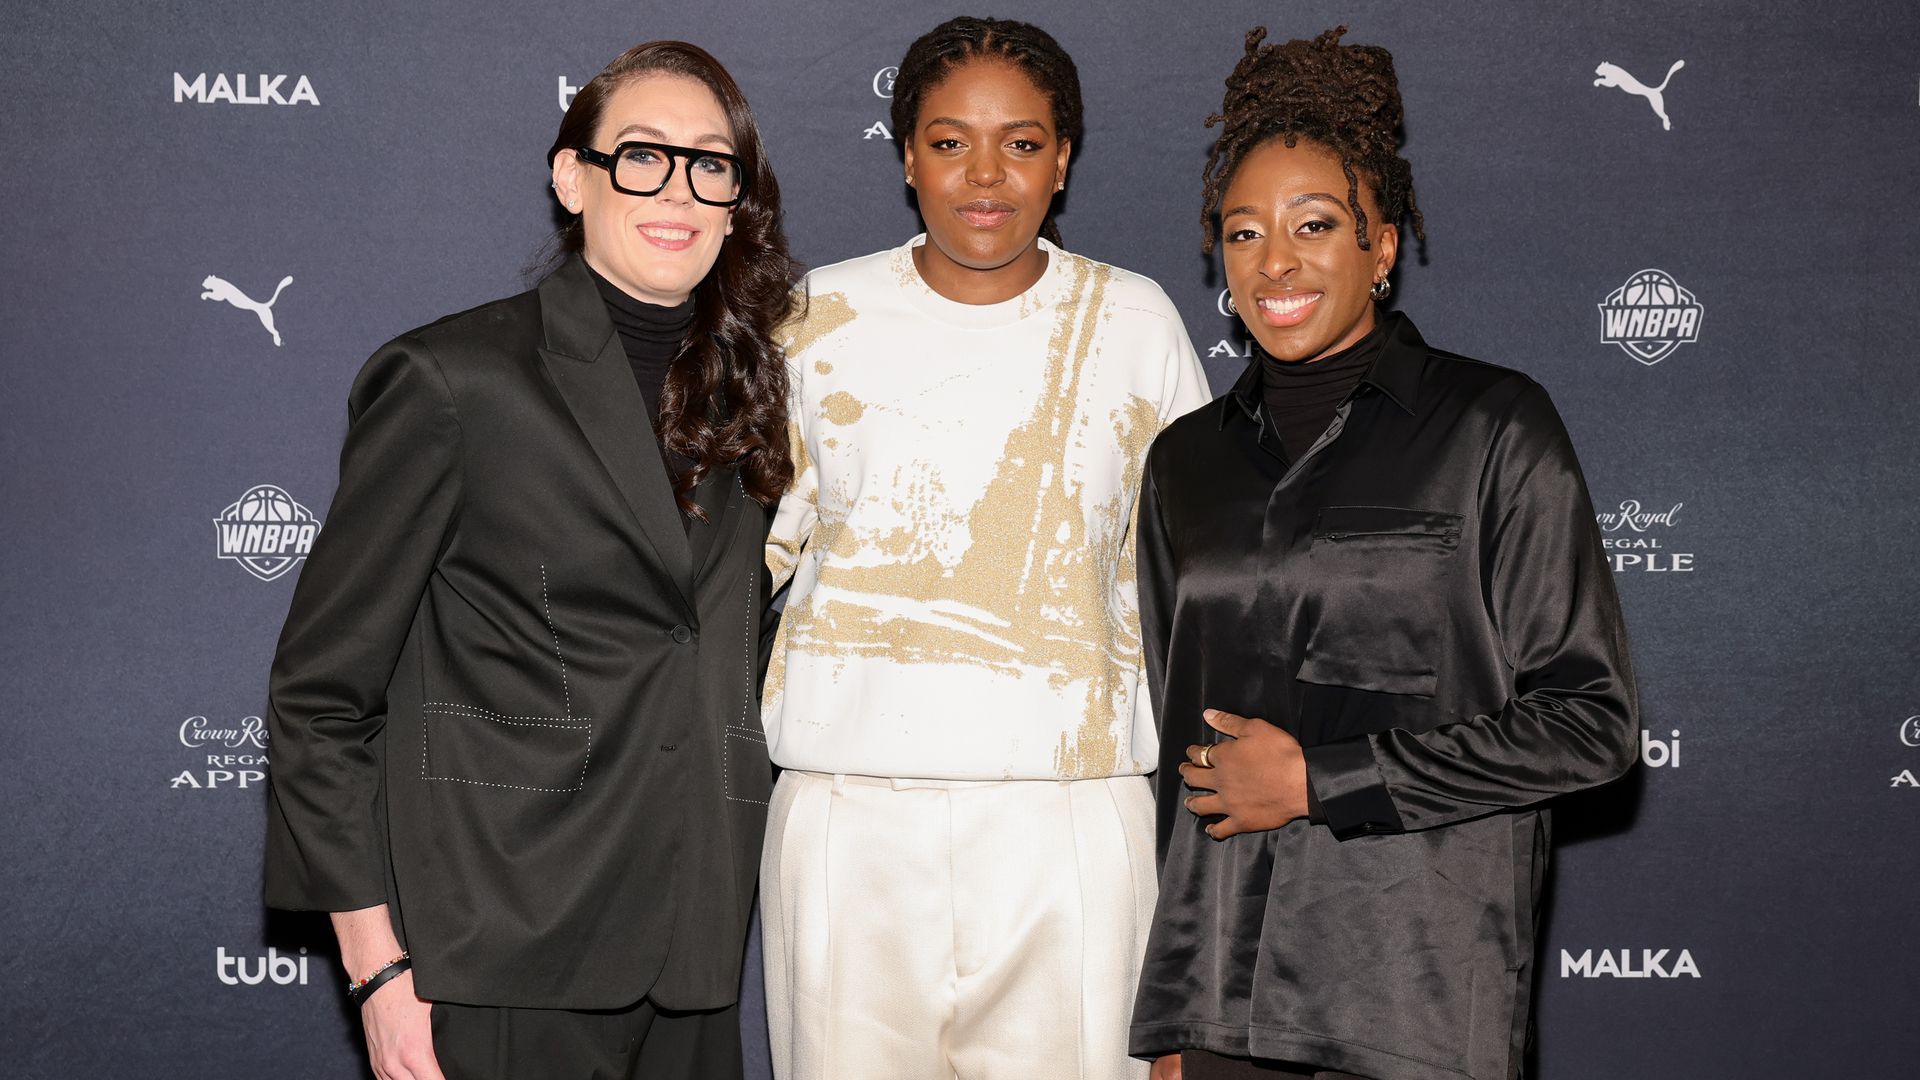 Breanna Stewart, Jonquel Jones, and Nneka Oguwumike attend "Shattered Glass: A WNBPA Story" premiere. 